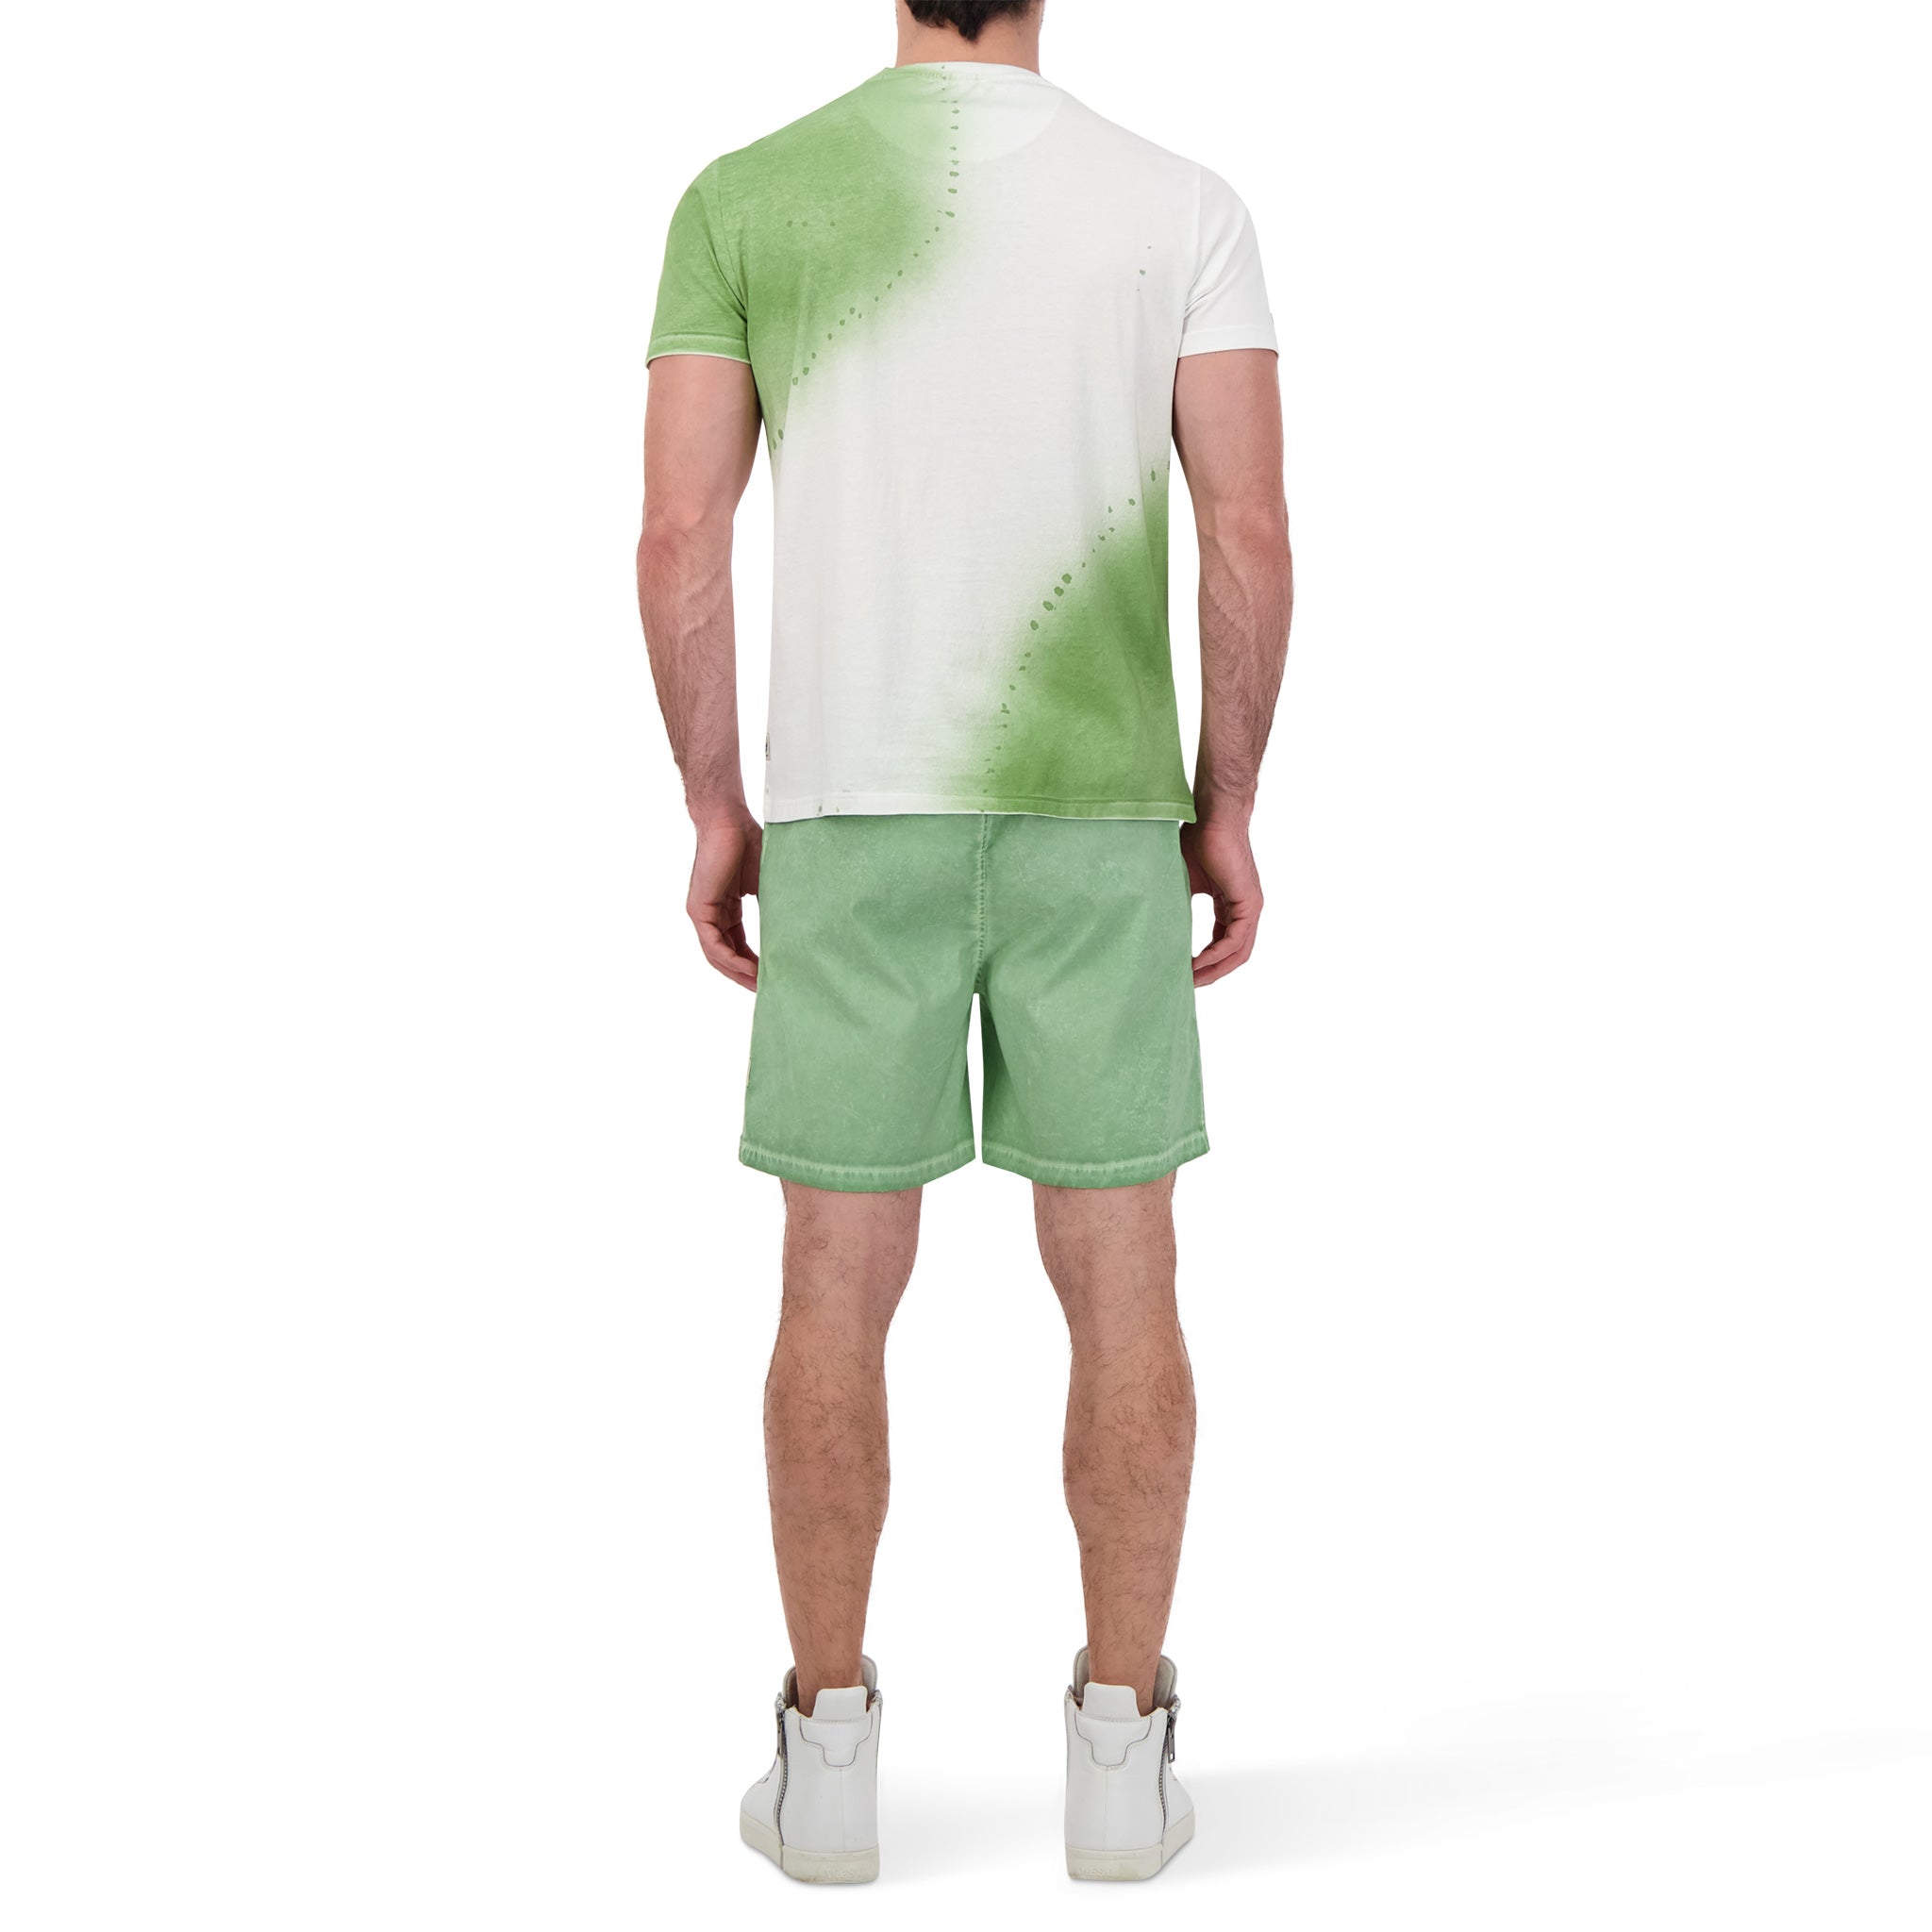 Splatter & Spray T-Shirt in Olive